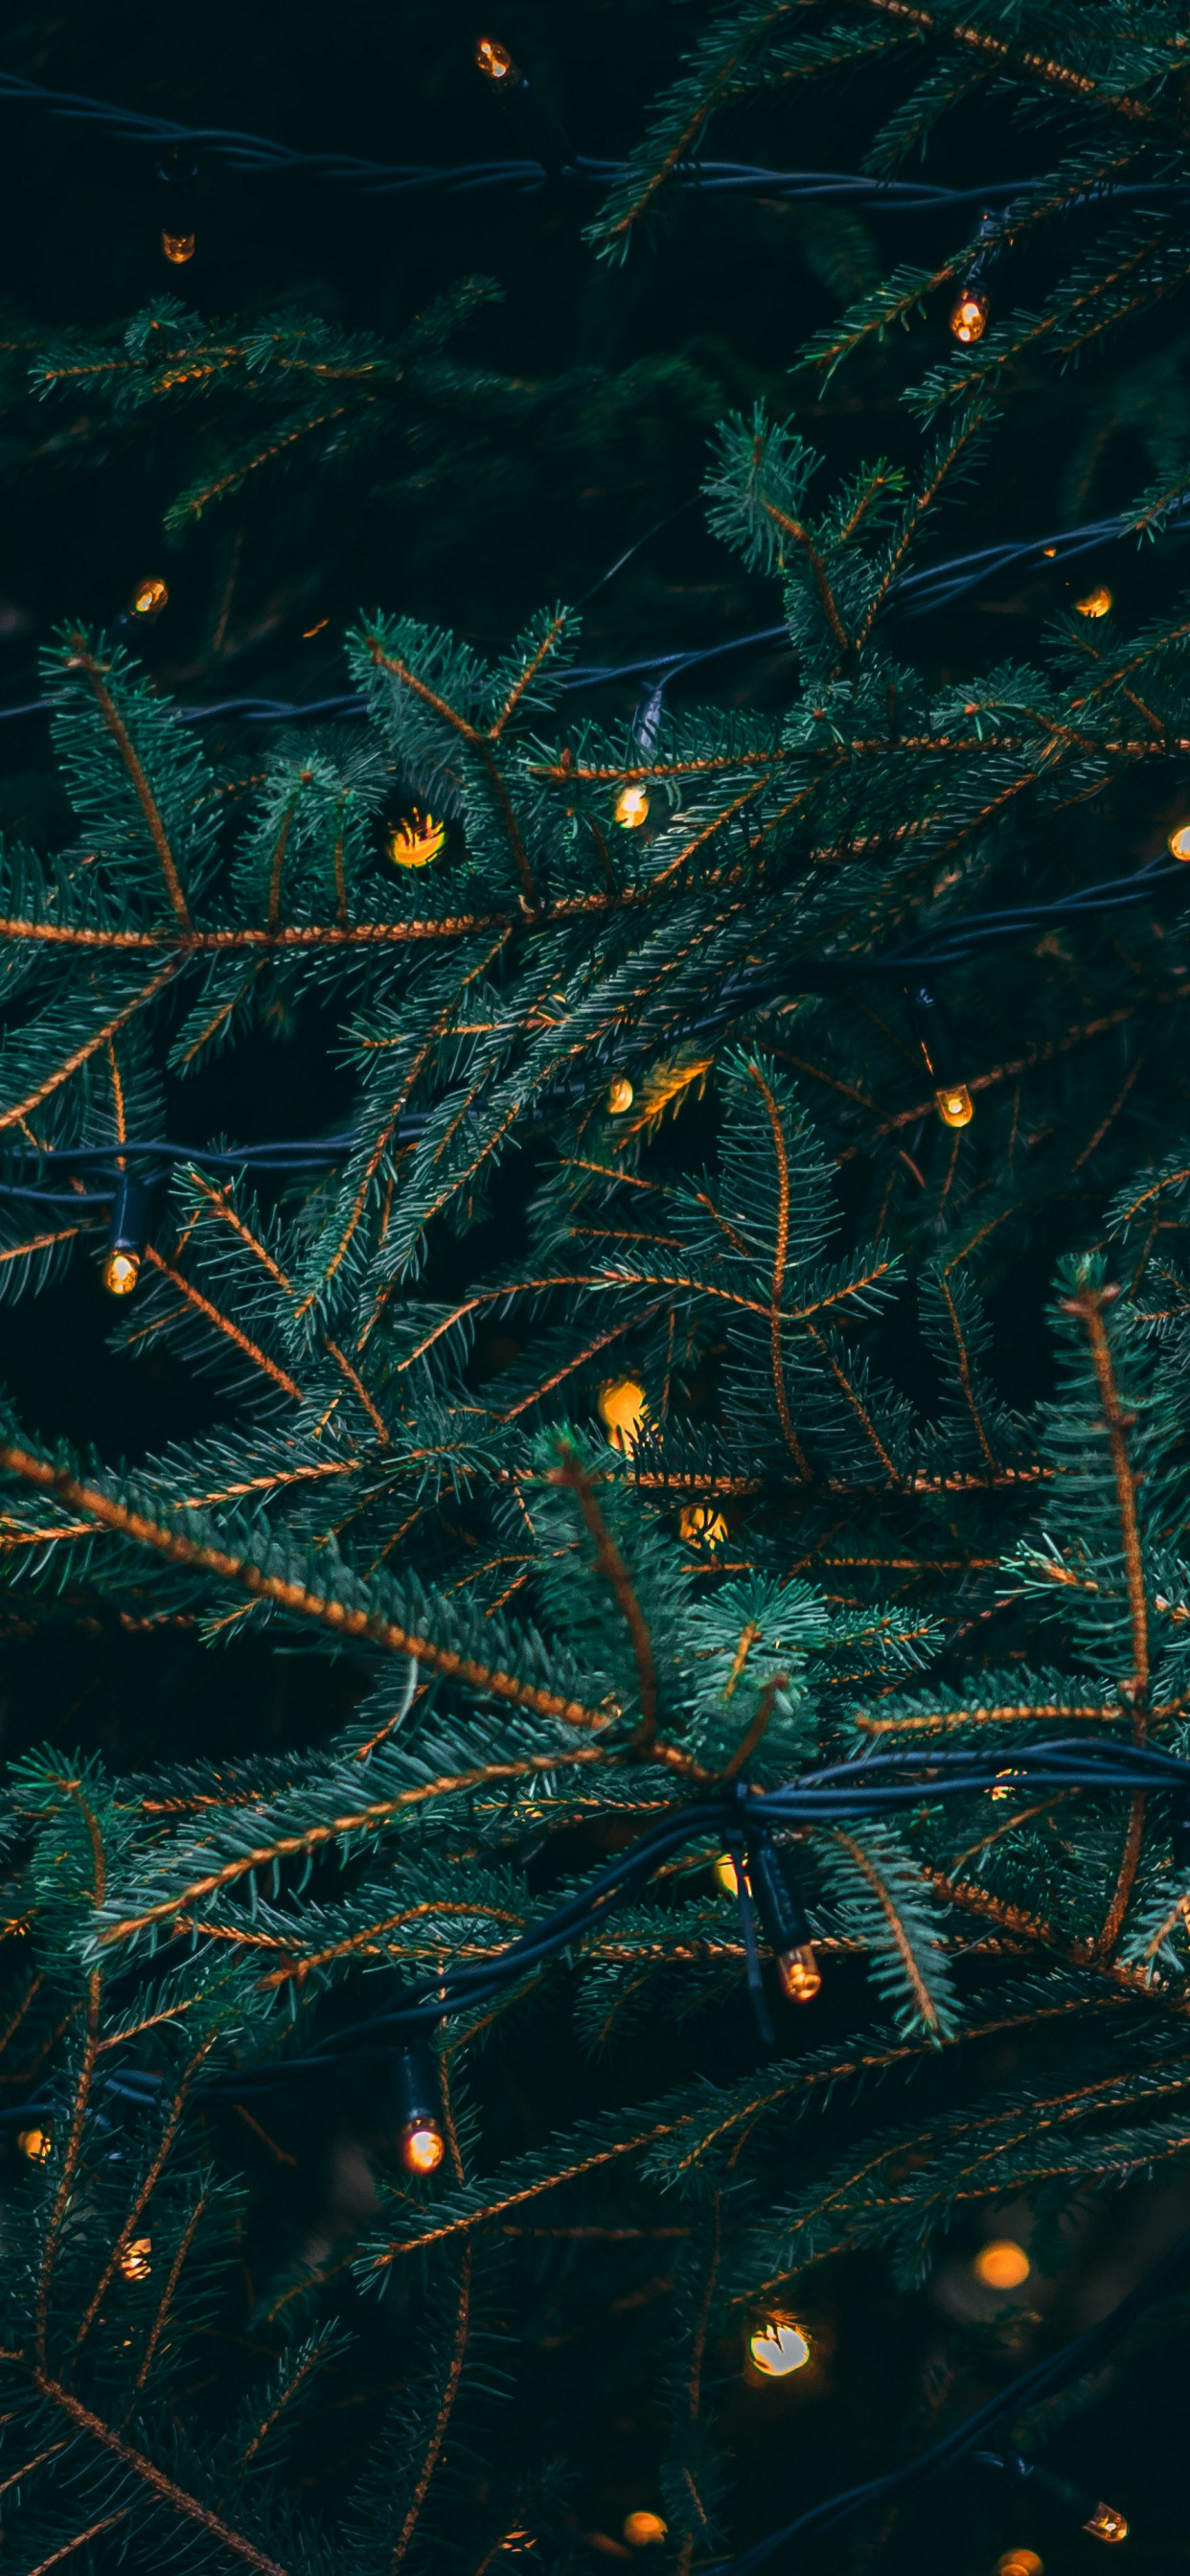 Christmas Lights iPhone Wallpaper (79+